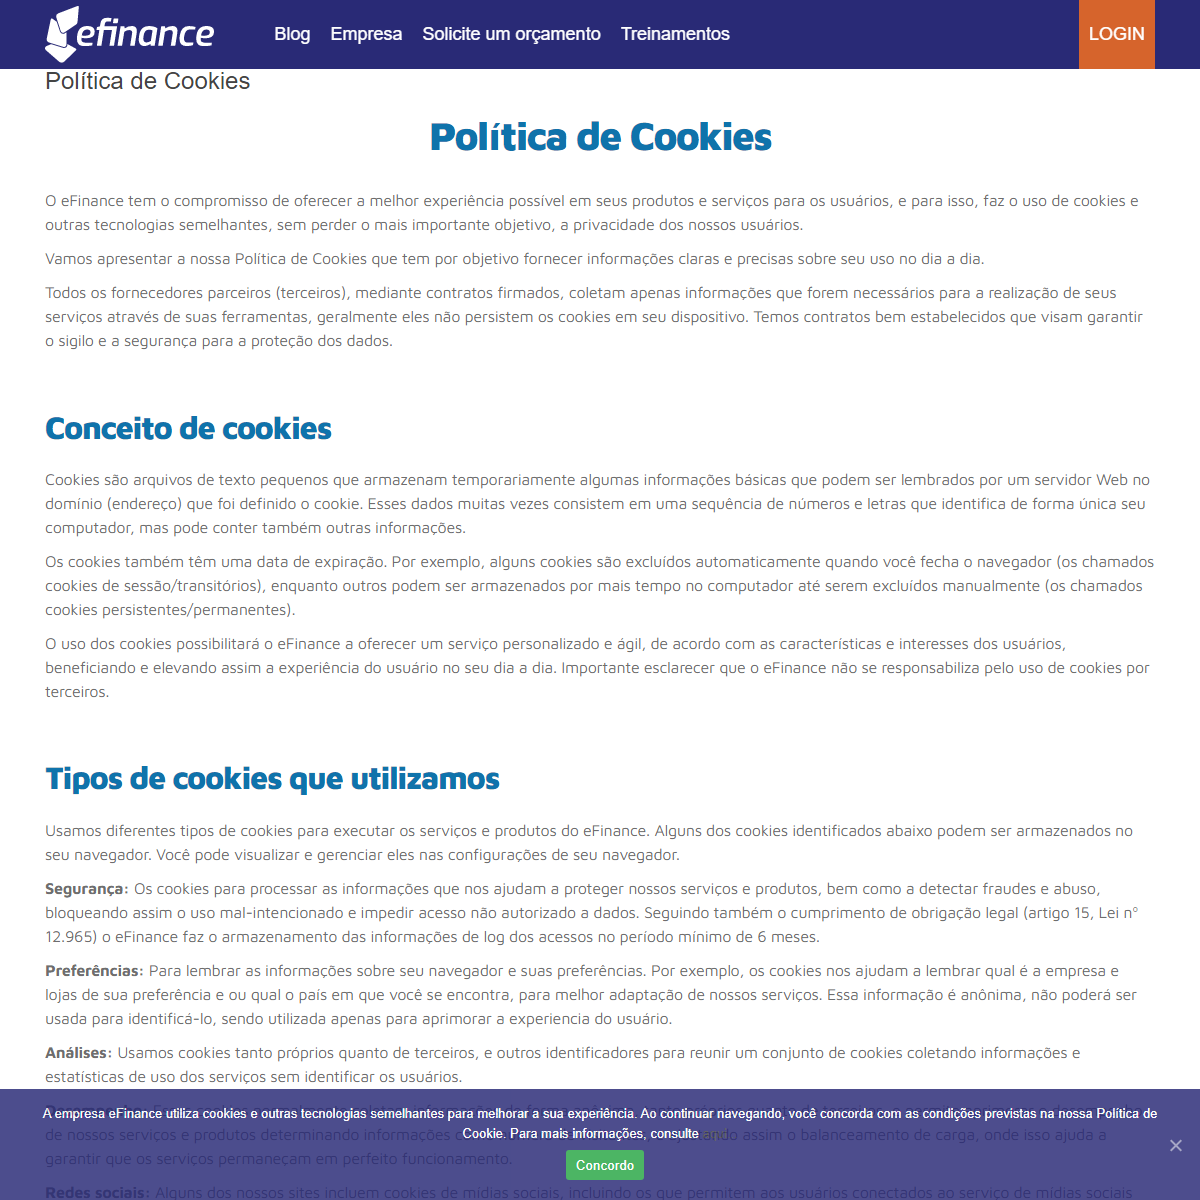 A complete backup of https://www.efinance.com.br/politica-de-cookies/